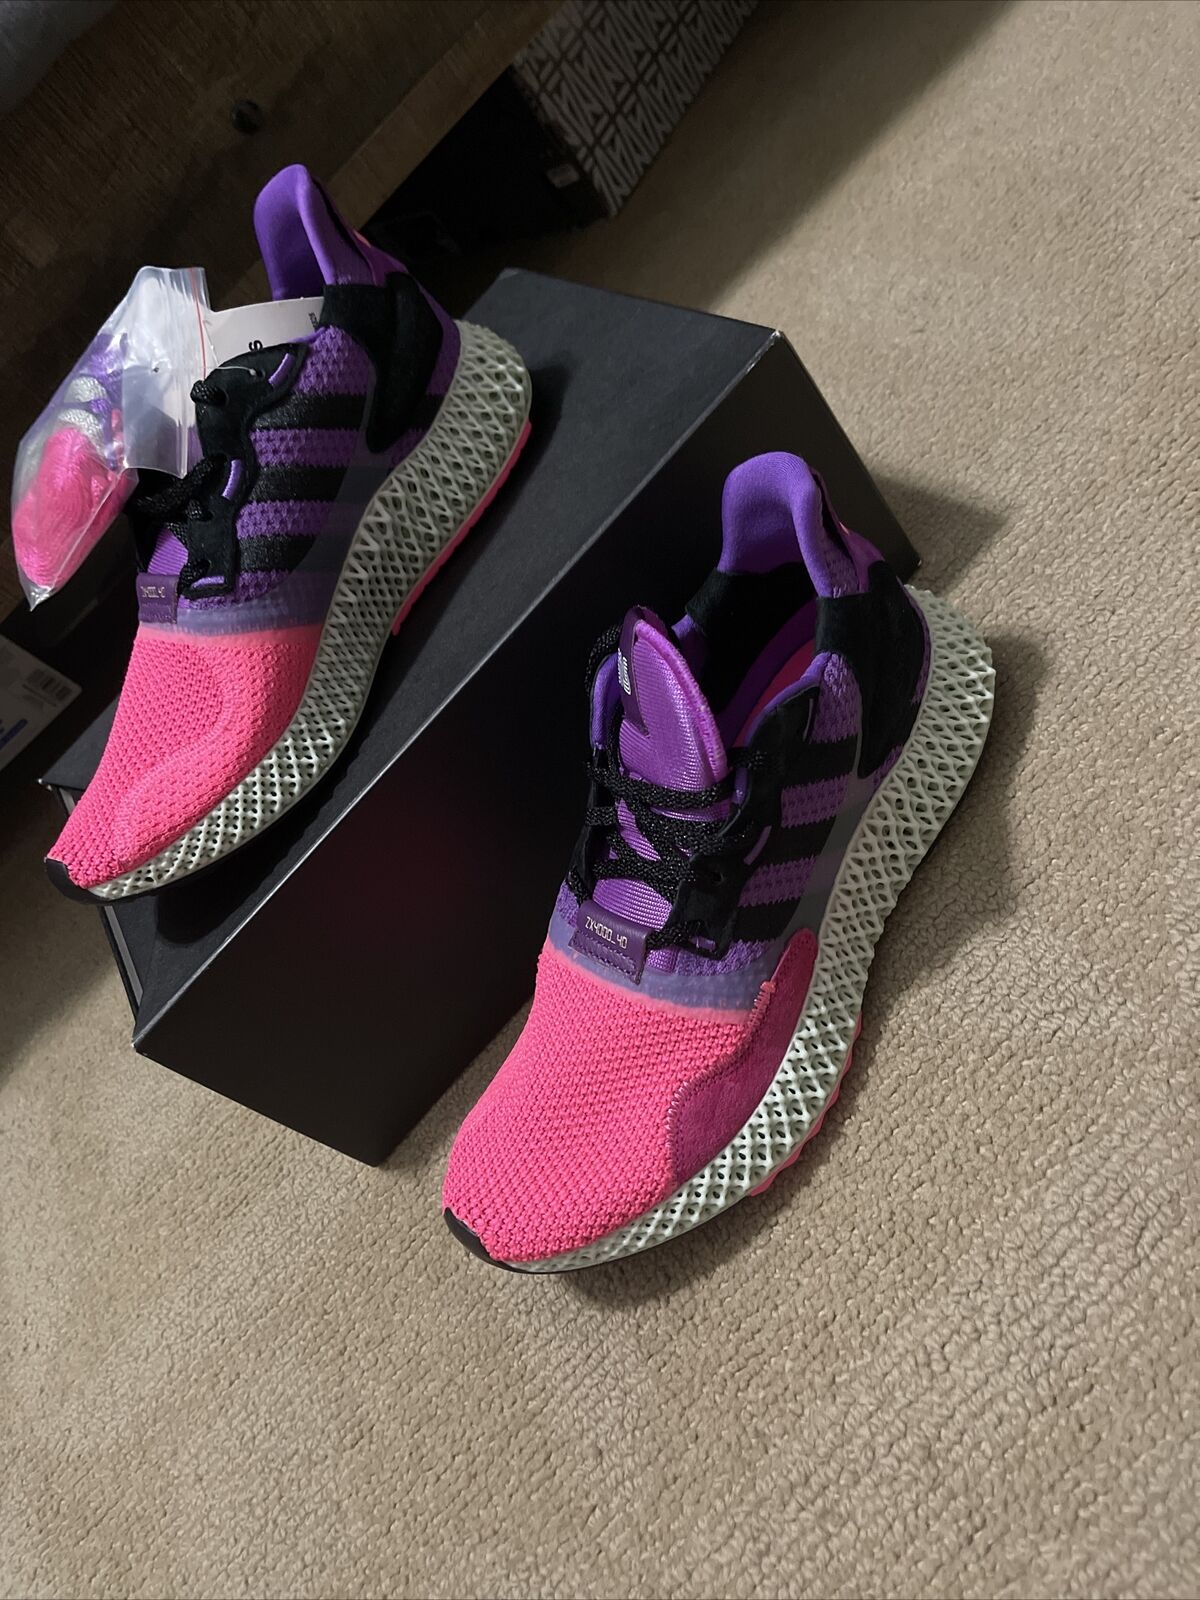 Adidas ZX SneakersNStuff 4D SNS Pink Purple Sunset Consortium FV5525 Sz 8 | eBay